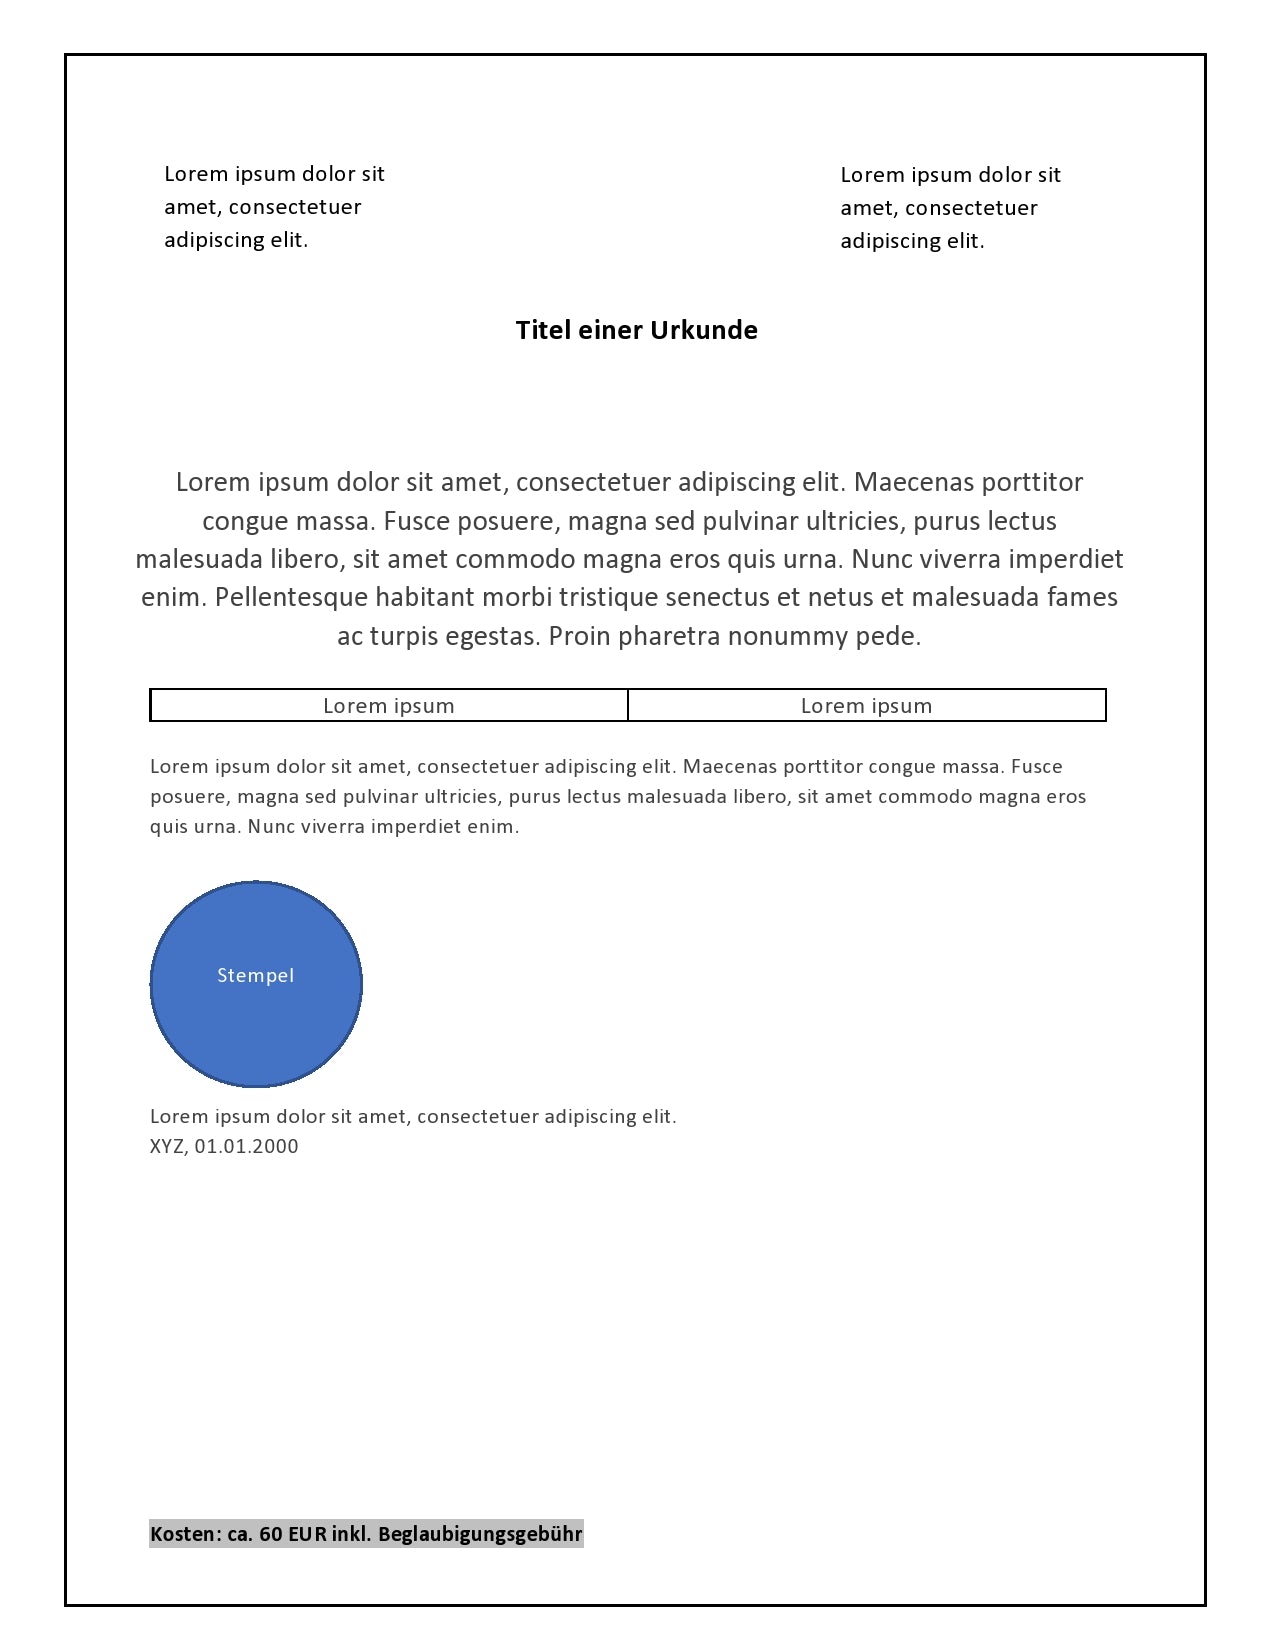 Mittlerer Schulabschluss (GBR) Middle School Certificate of Completion/ Promotion - Shop-Translation.de - Übersetzungsbüro ReSartus 